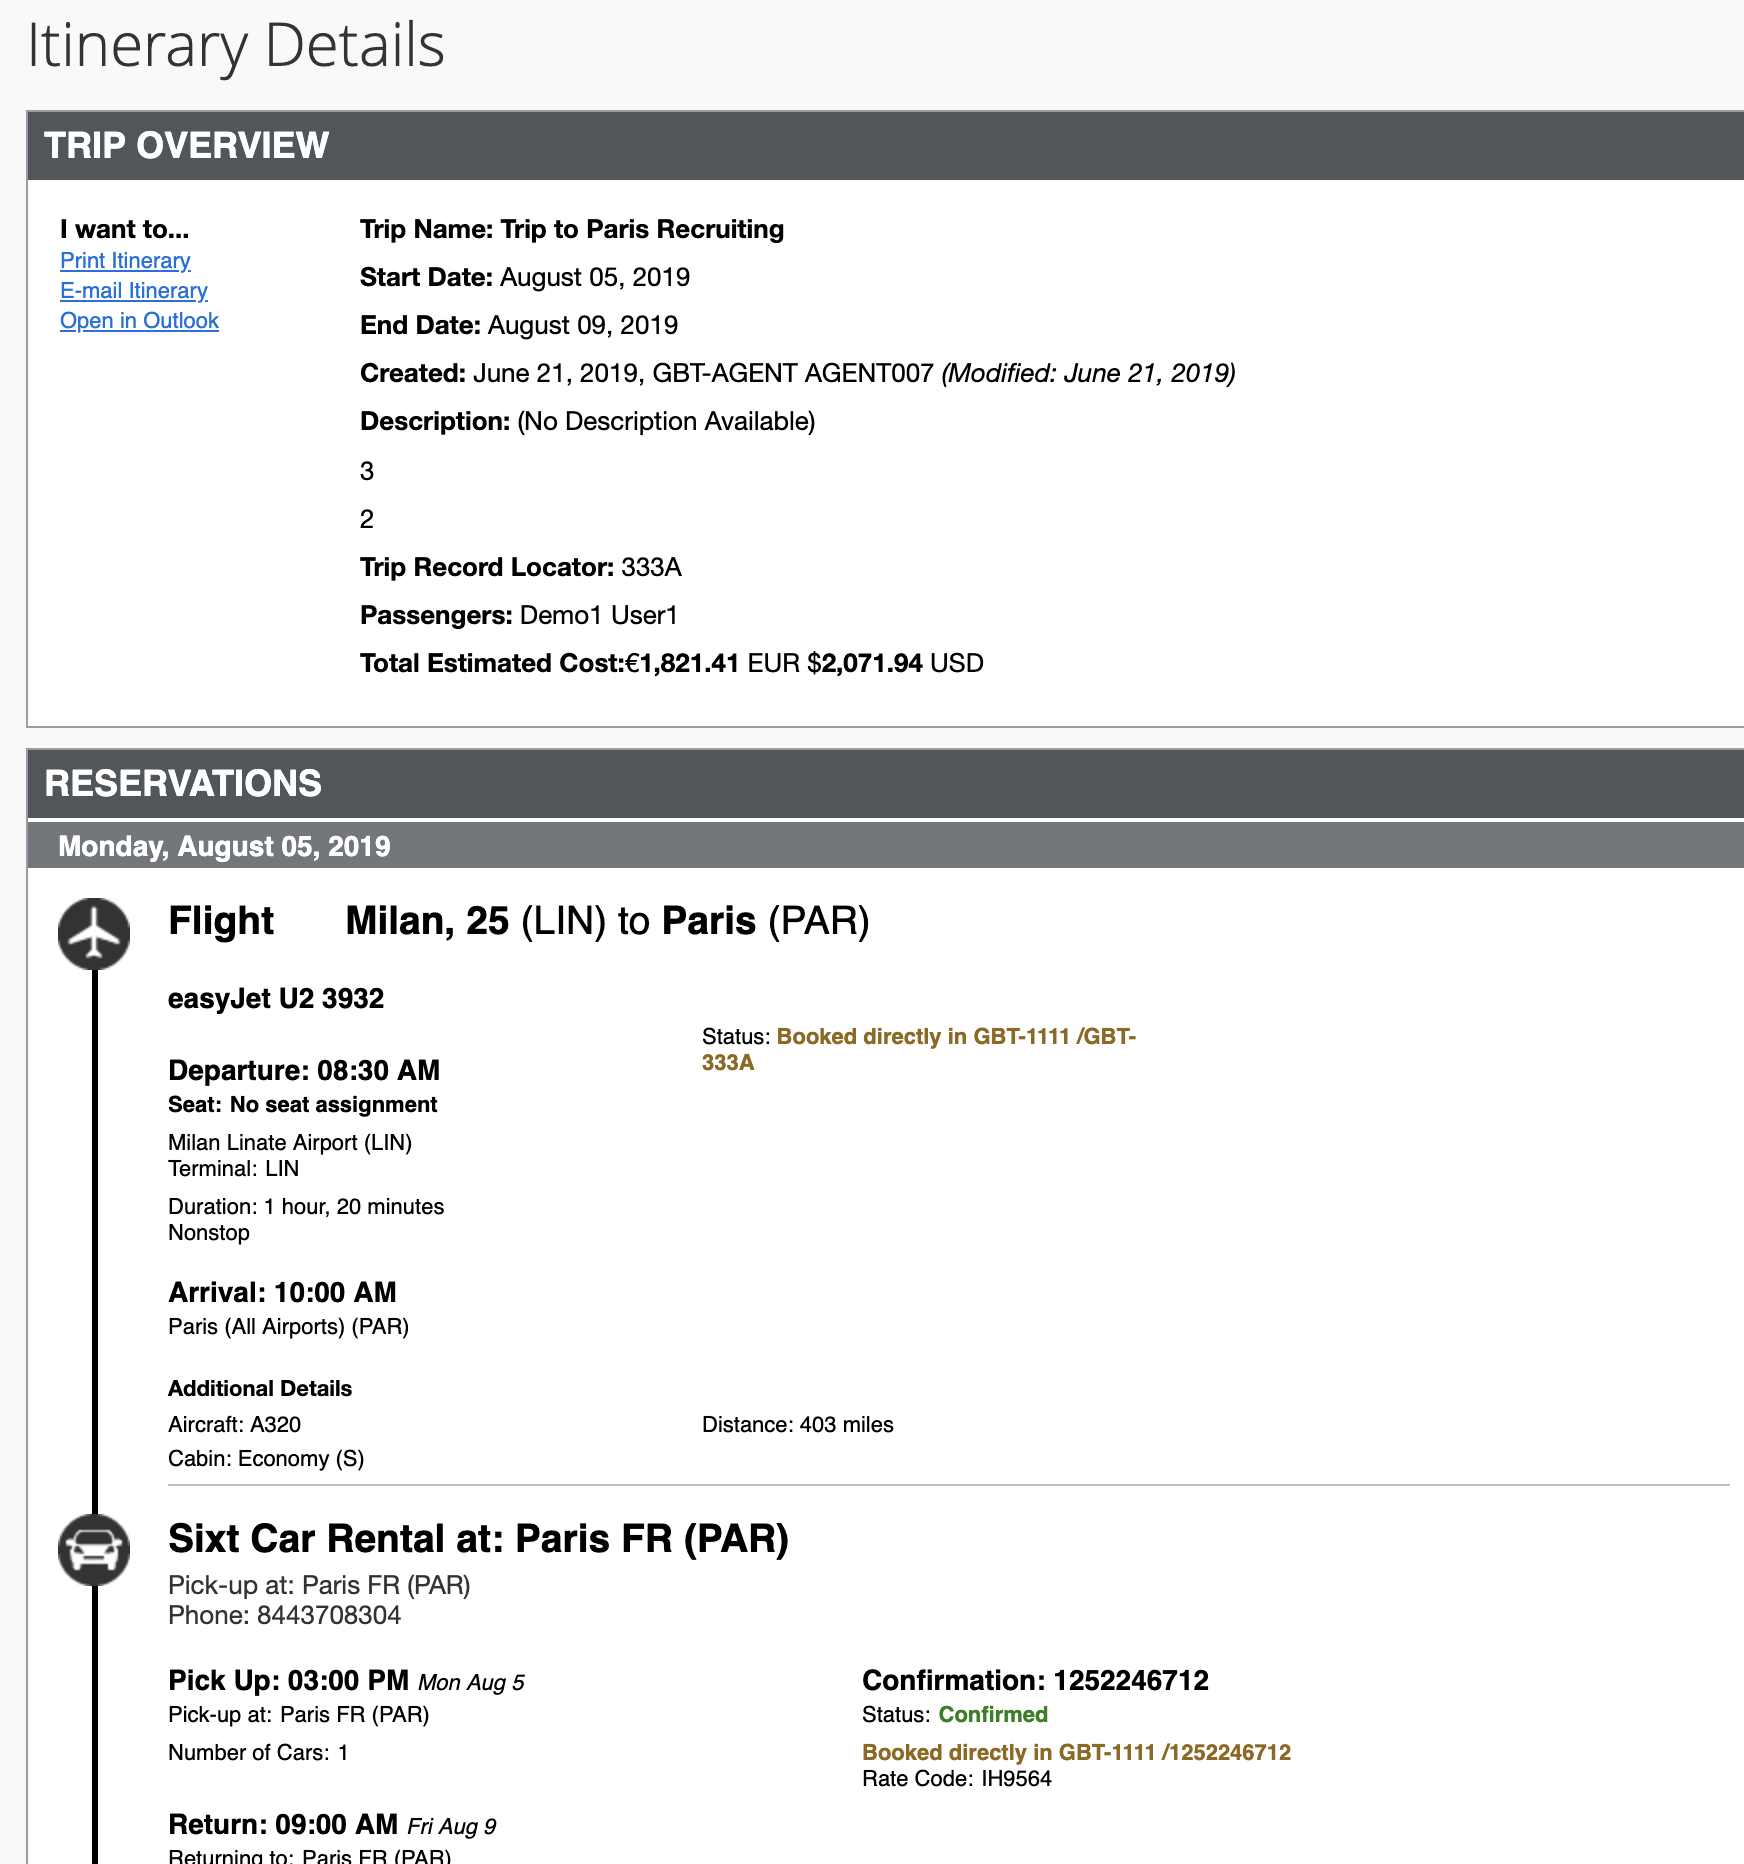 SAP Concur UI showing itinerary details